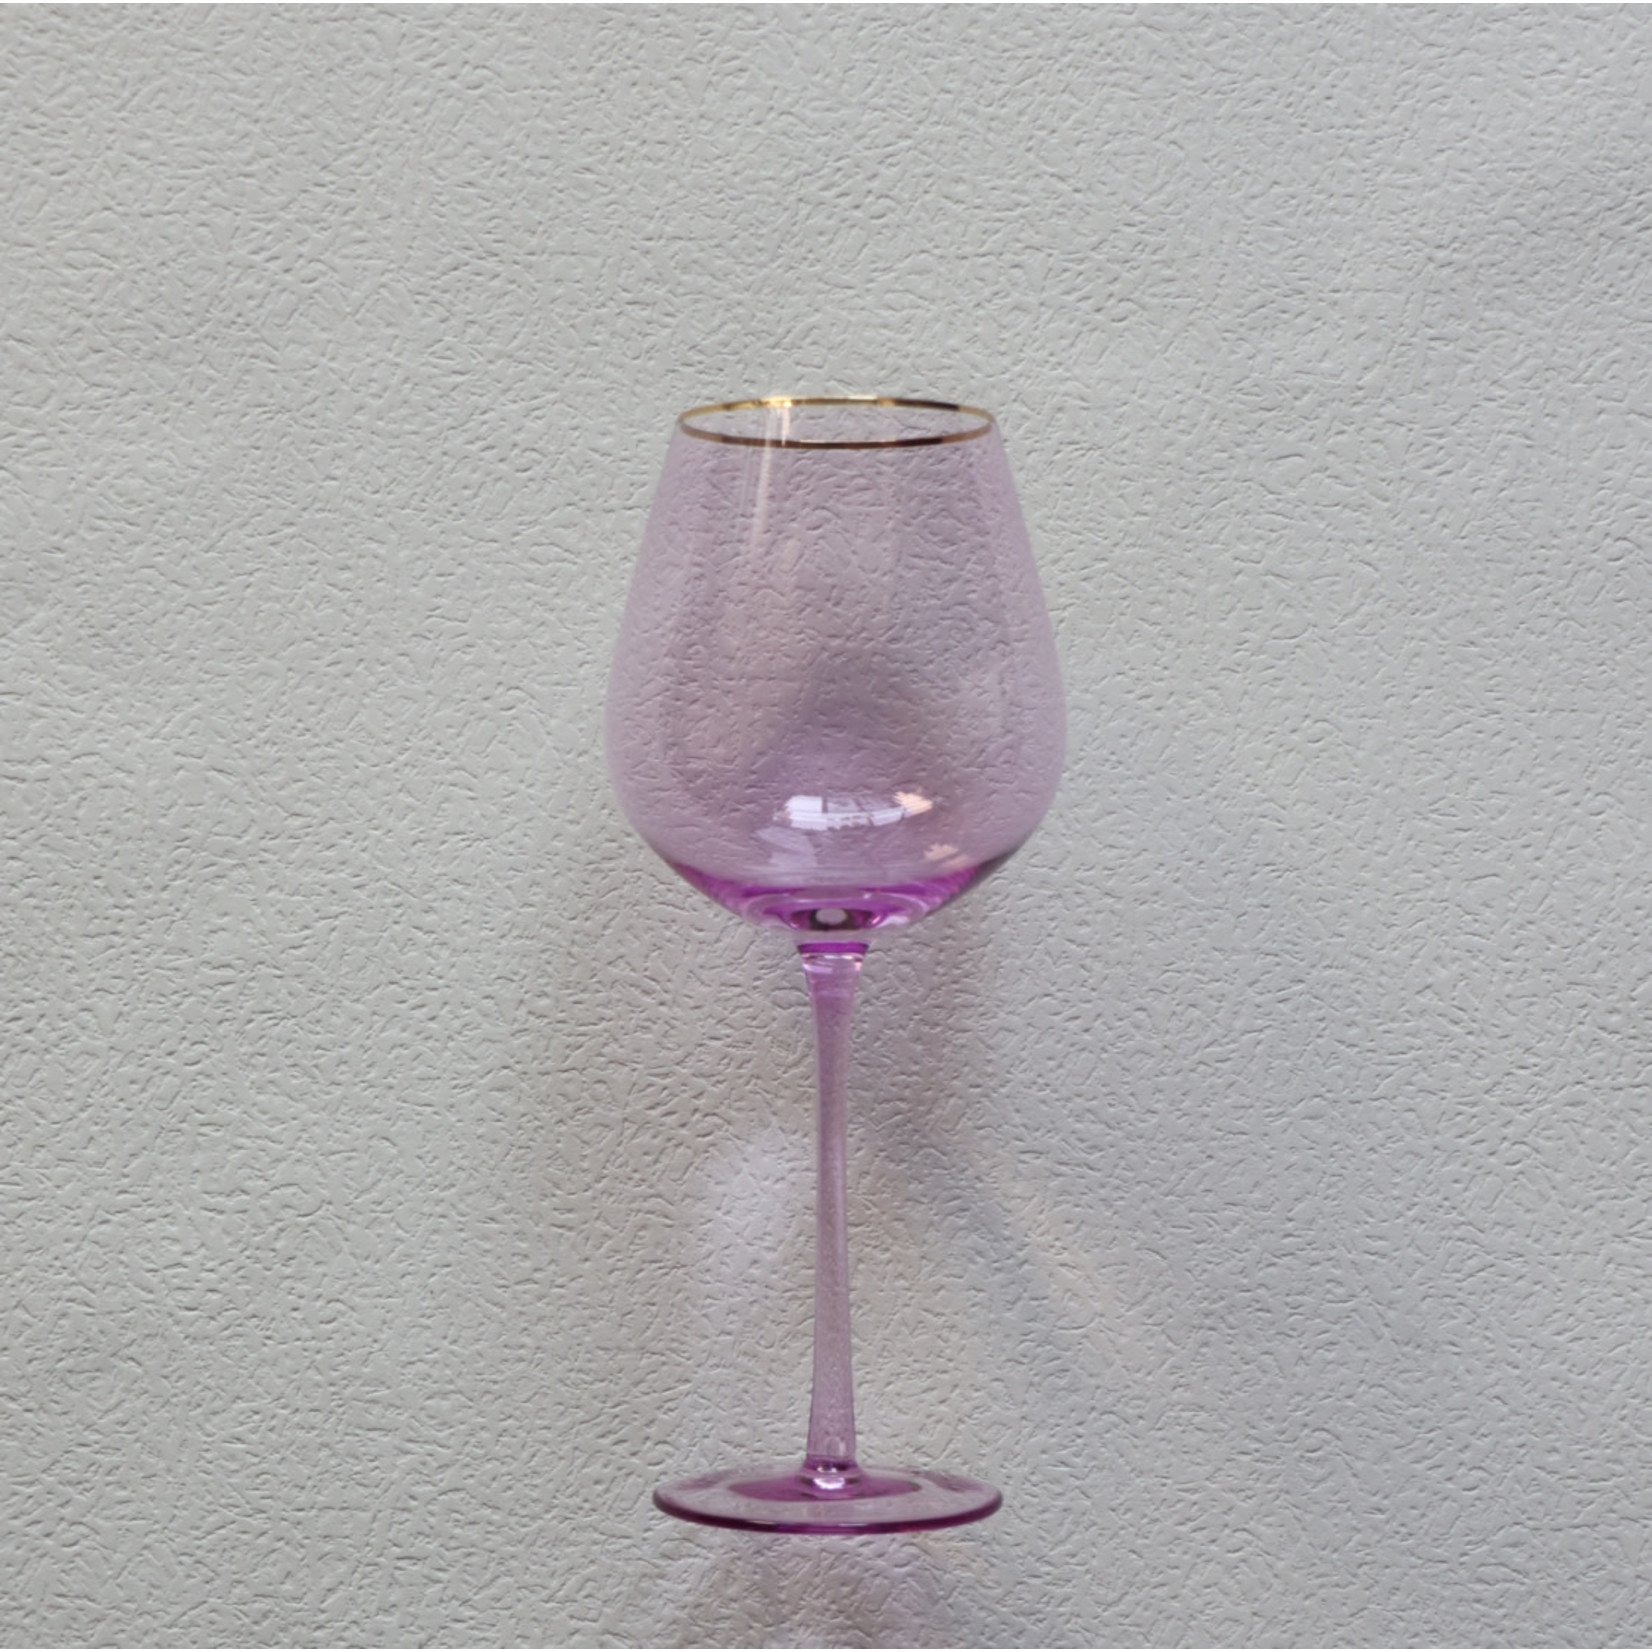 TWS VD-P27-LI Vikko Decor - Platinum, Lilac with Gold Rim, Wine Glass ...